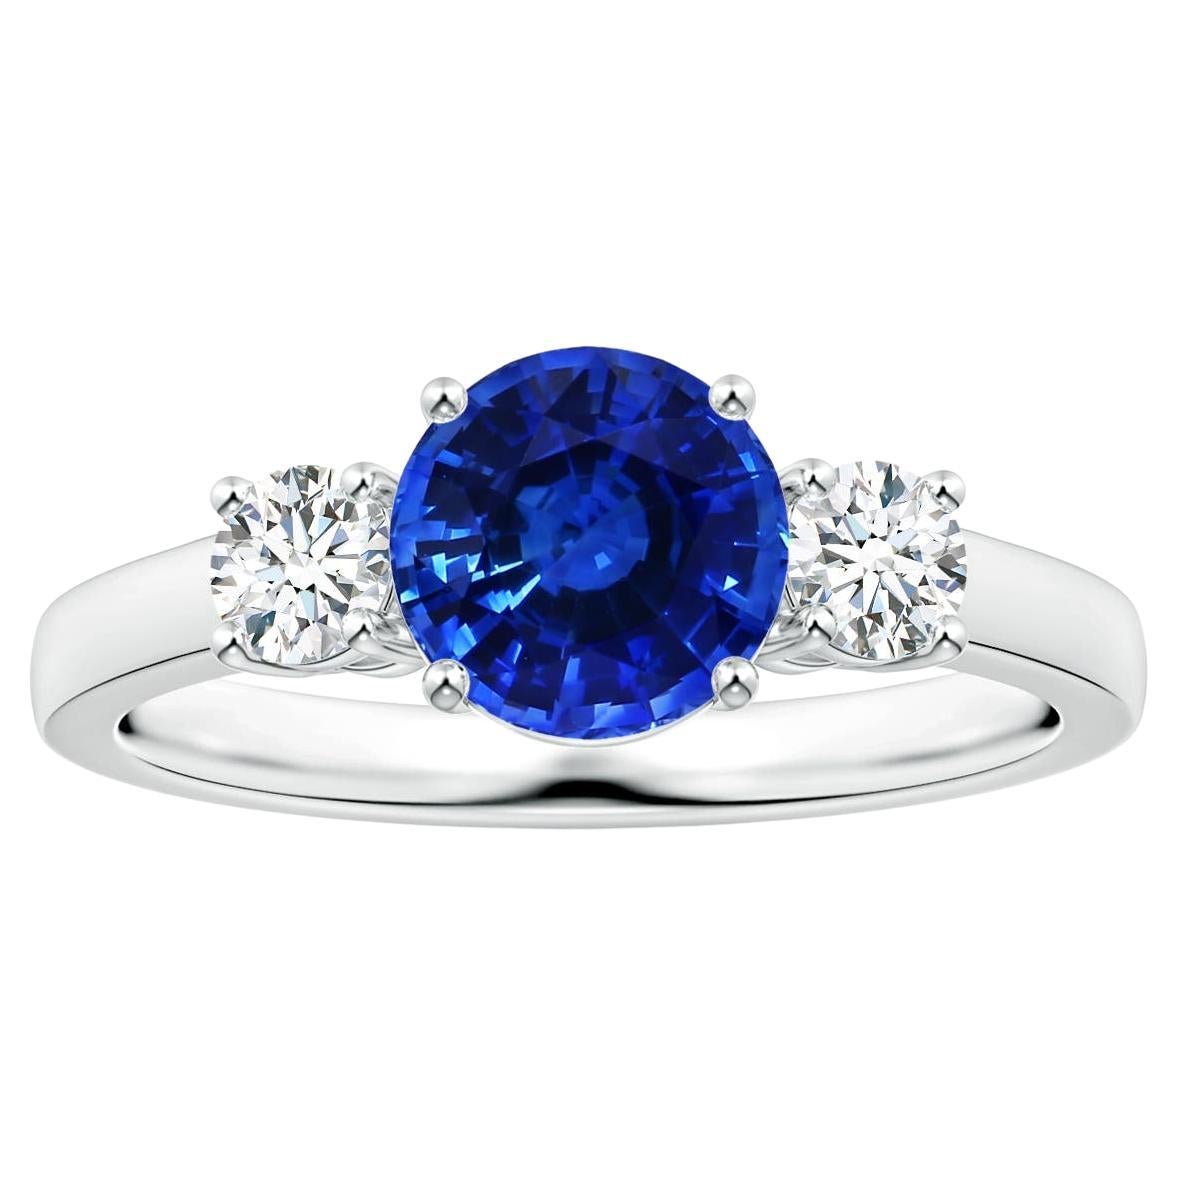 Angara Three Stone GIA Certified Blue Sapphire Ring in Platinum with Diamonds